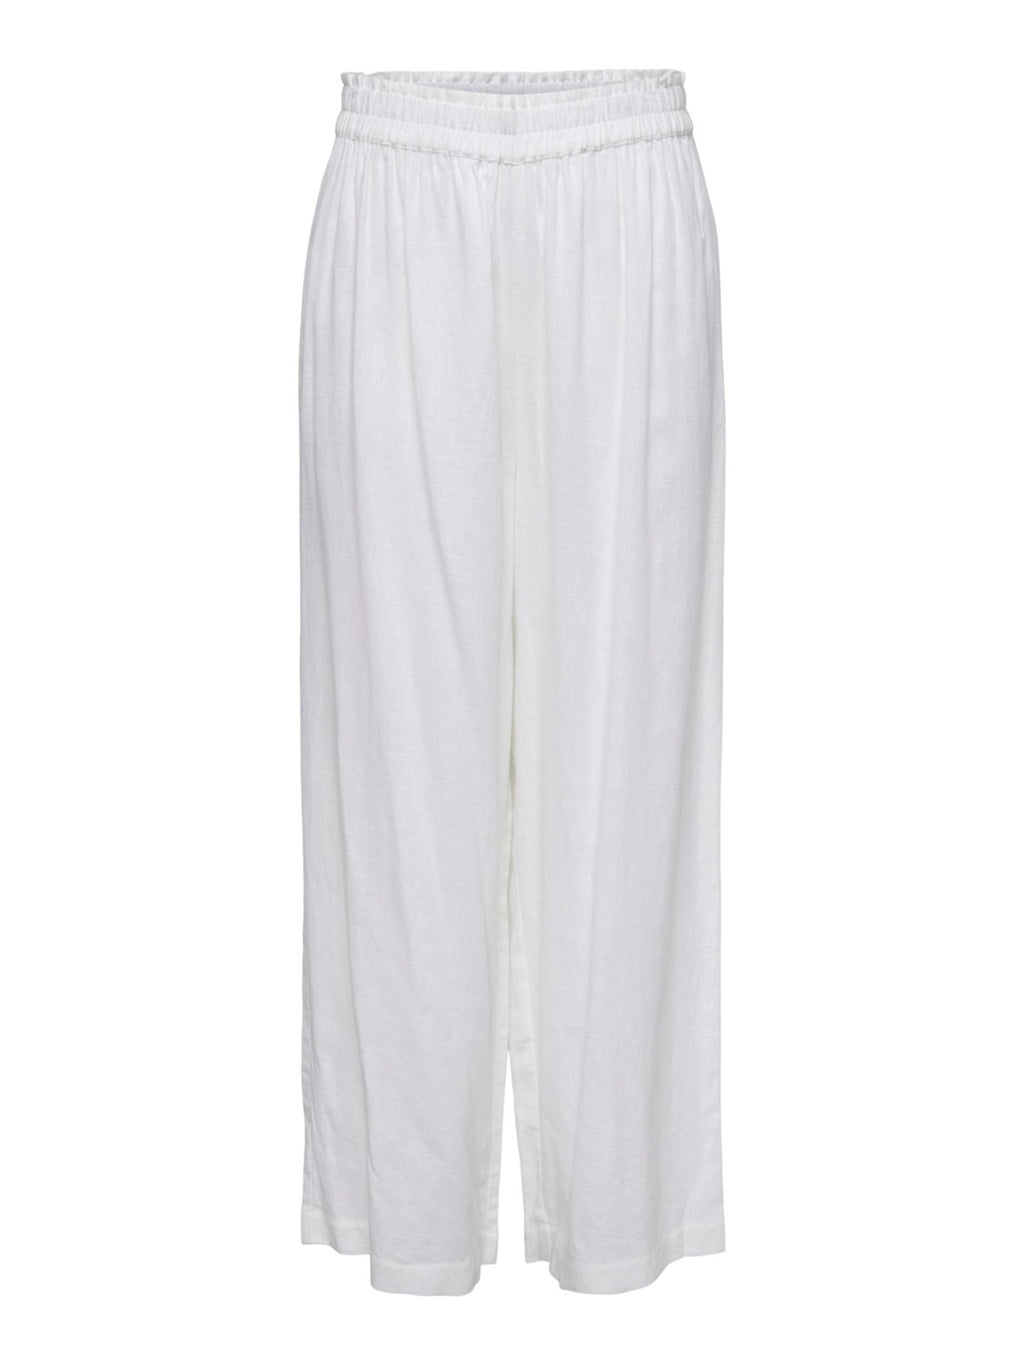 Tokyo Linen Pants - Bright White